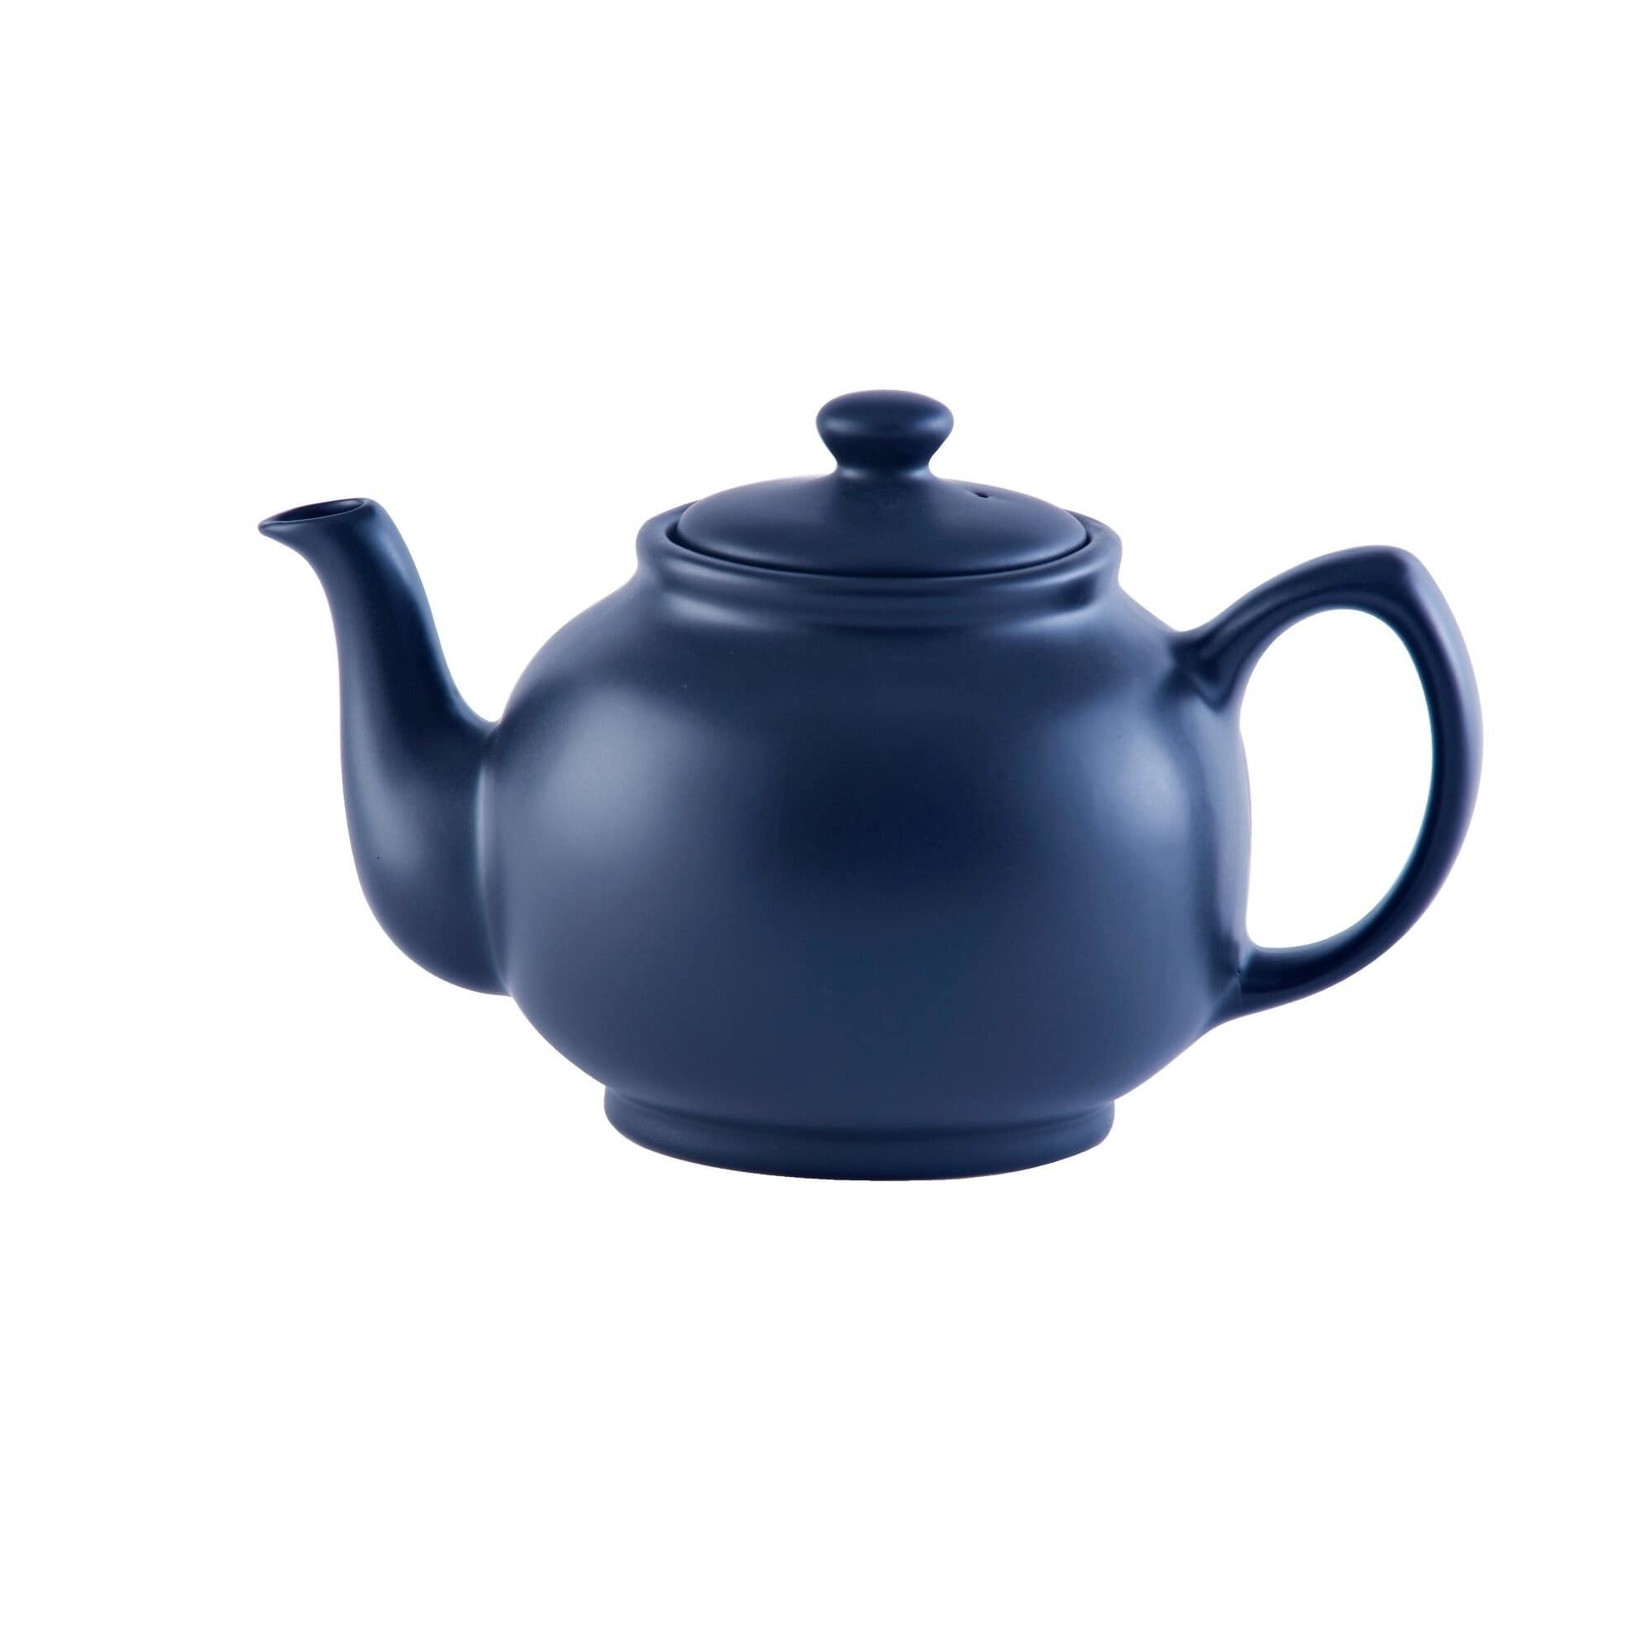 PRICE & KENSINGTON PRICE & KENSINGTON Teapot 6 Cup - Matte Navy